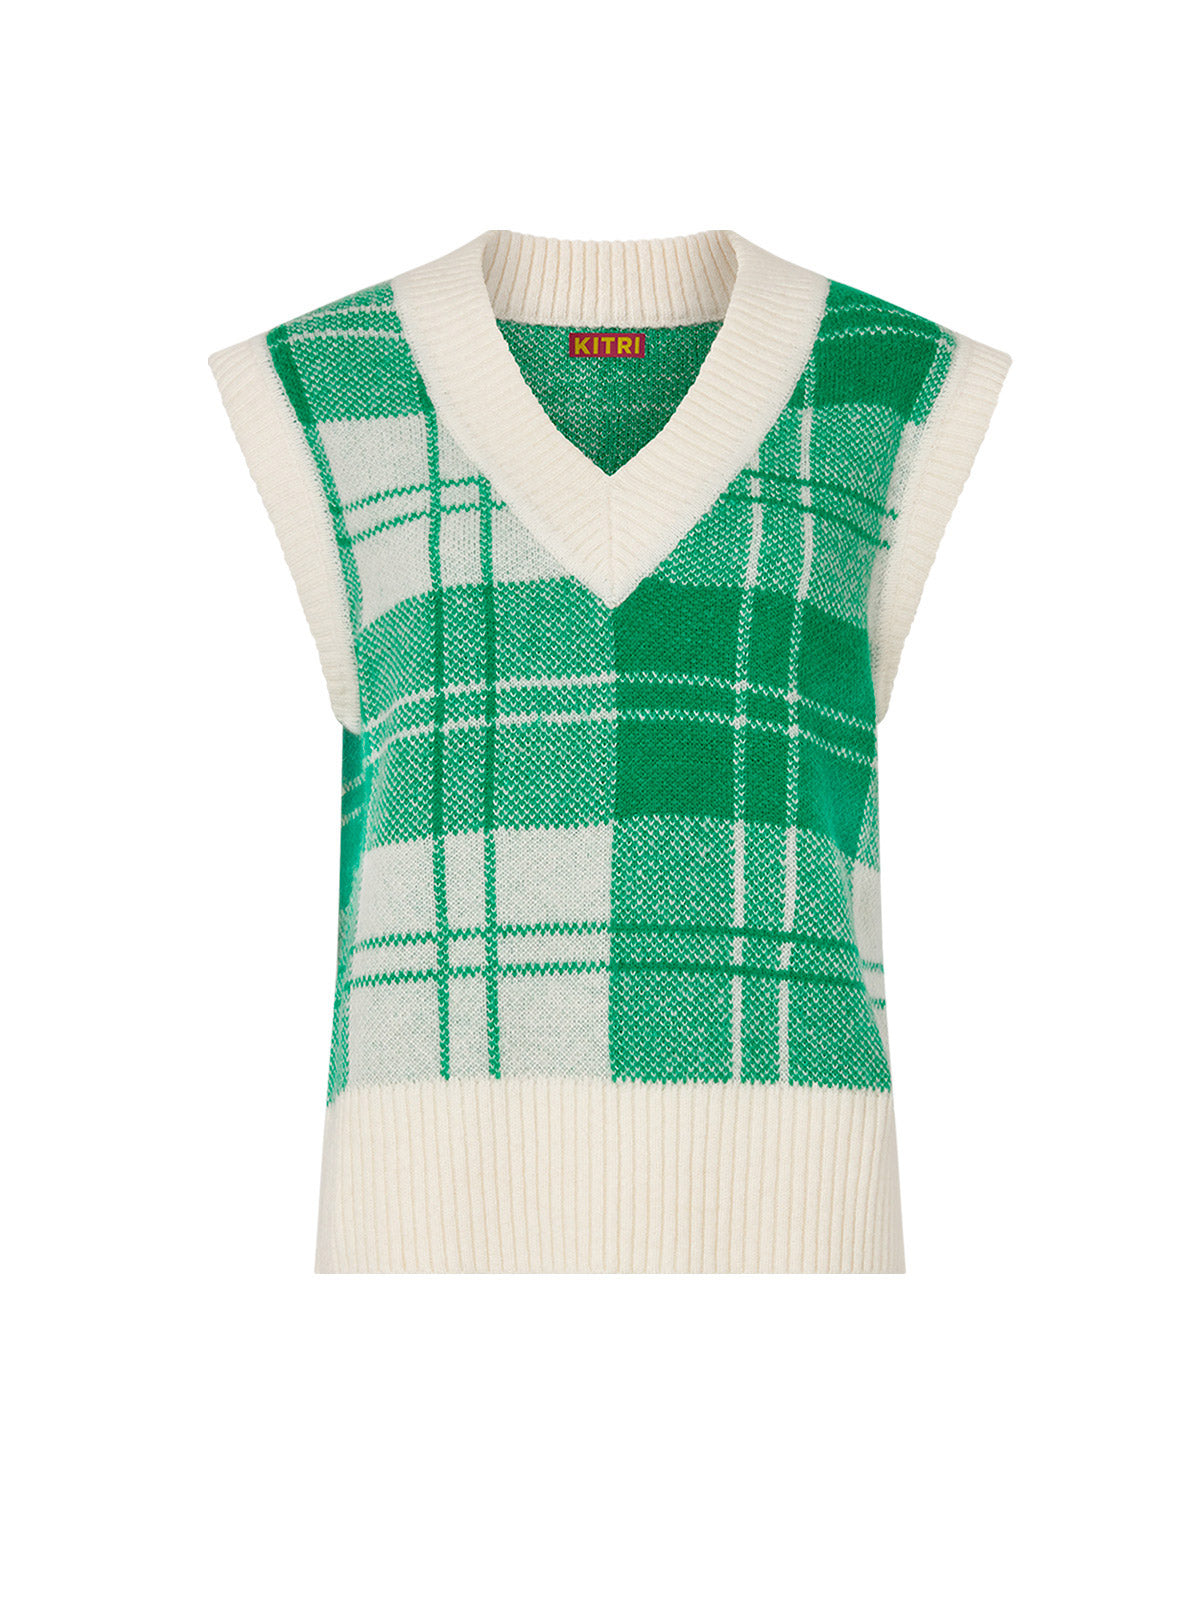 Meadow Green Check Knit Vest by KITRI Studio